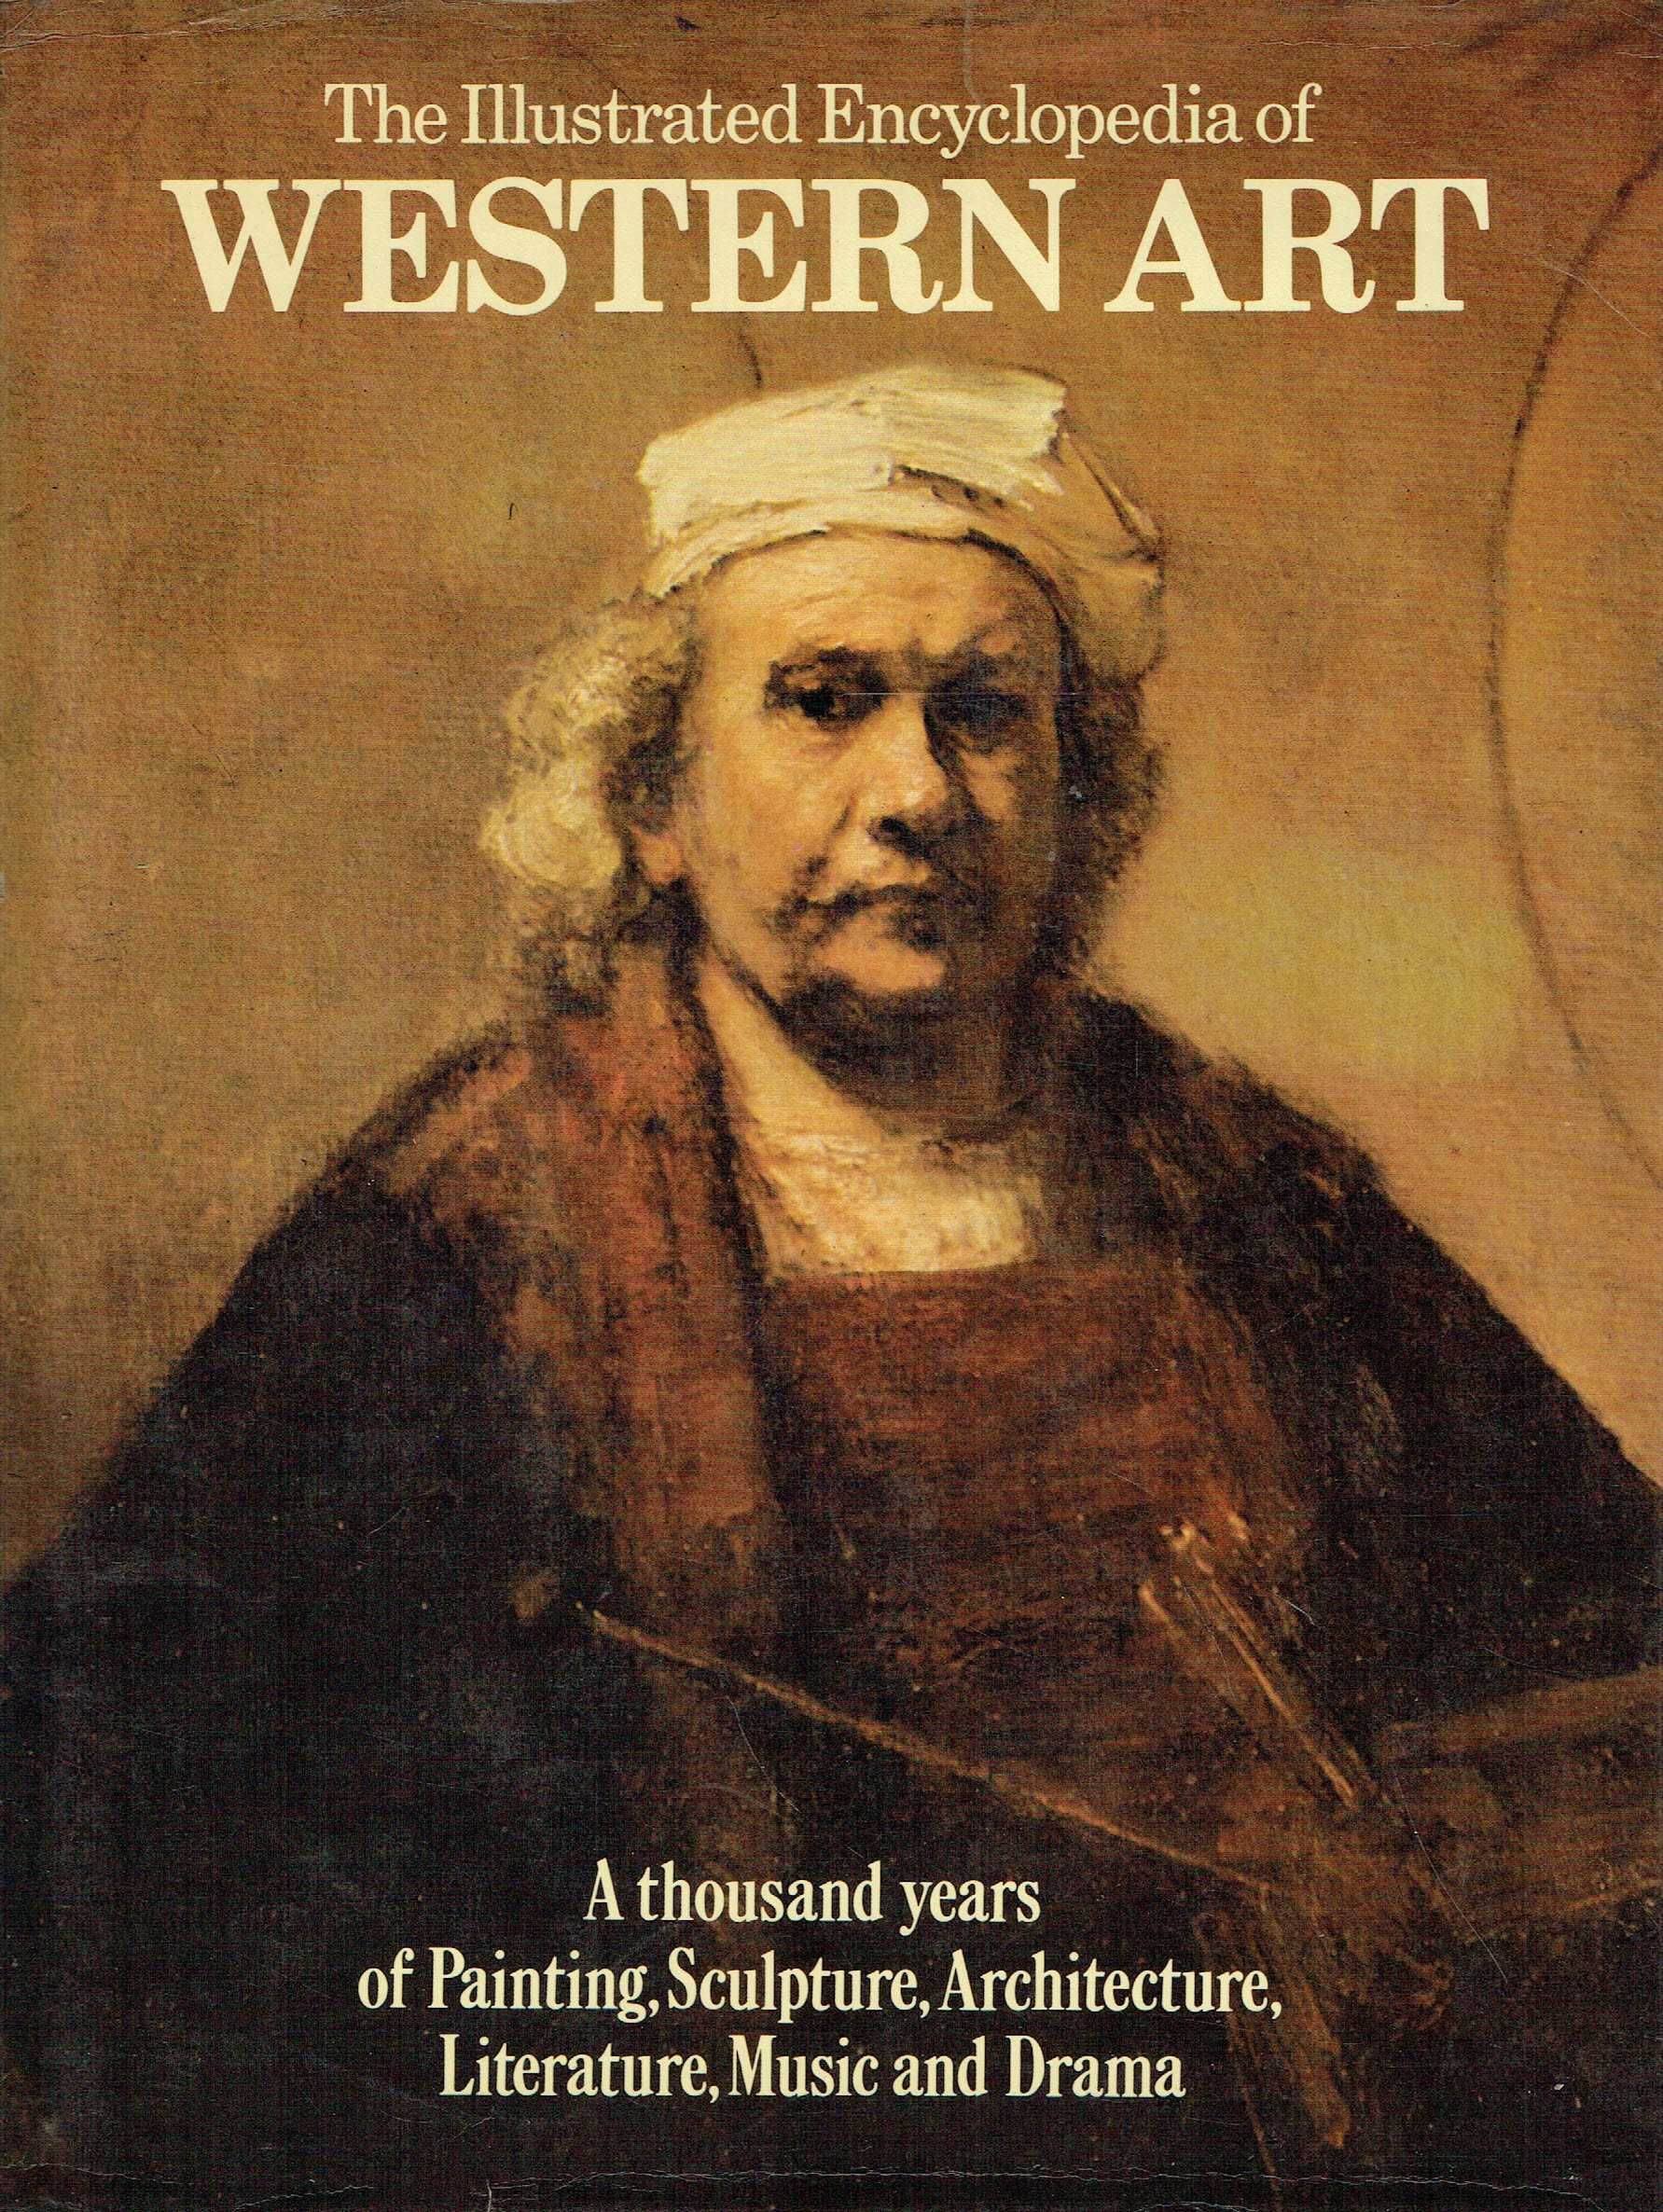 14947

Illustrated Encyclopedia of Western Art